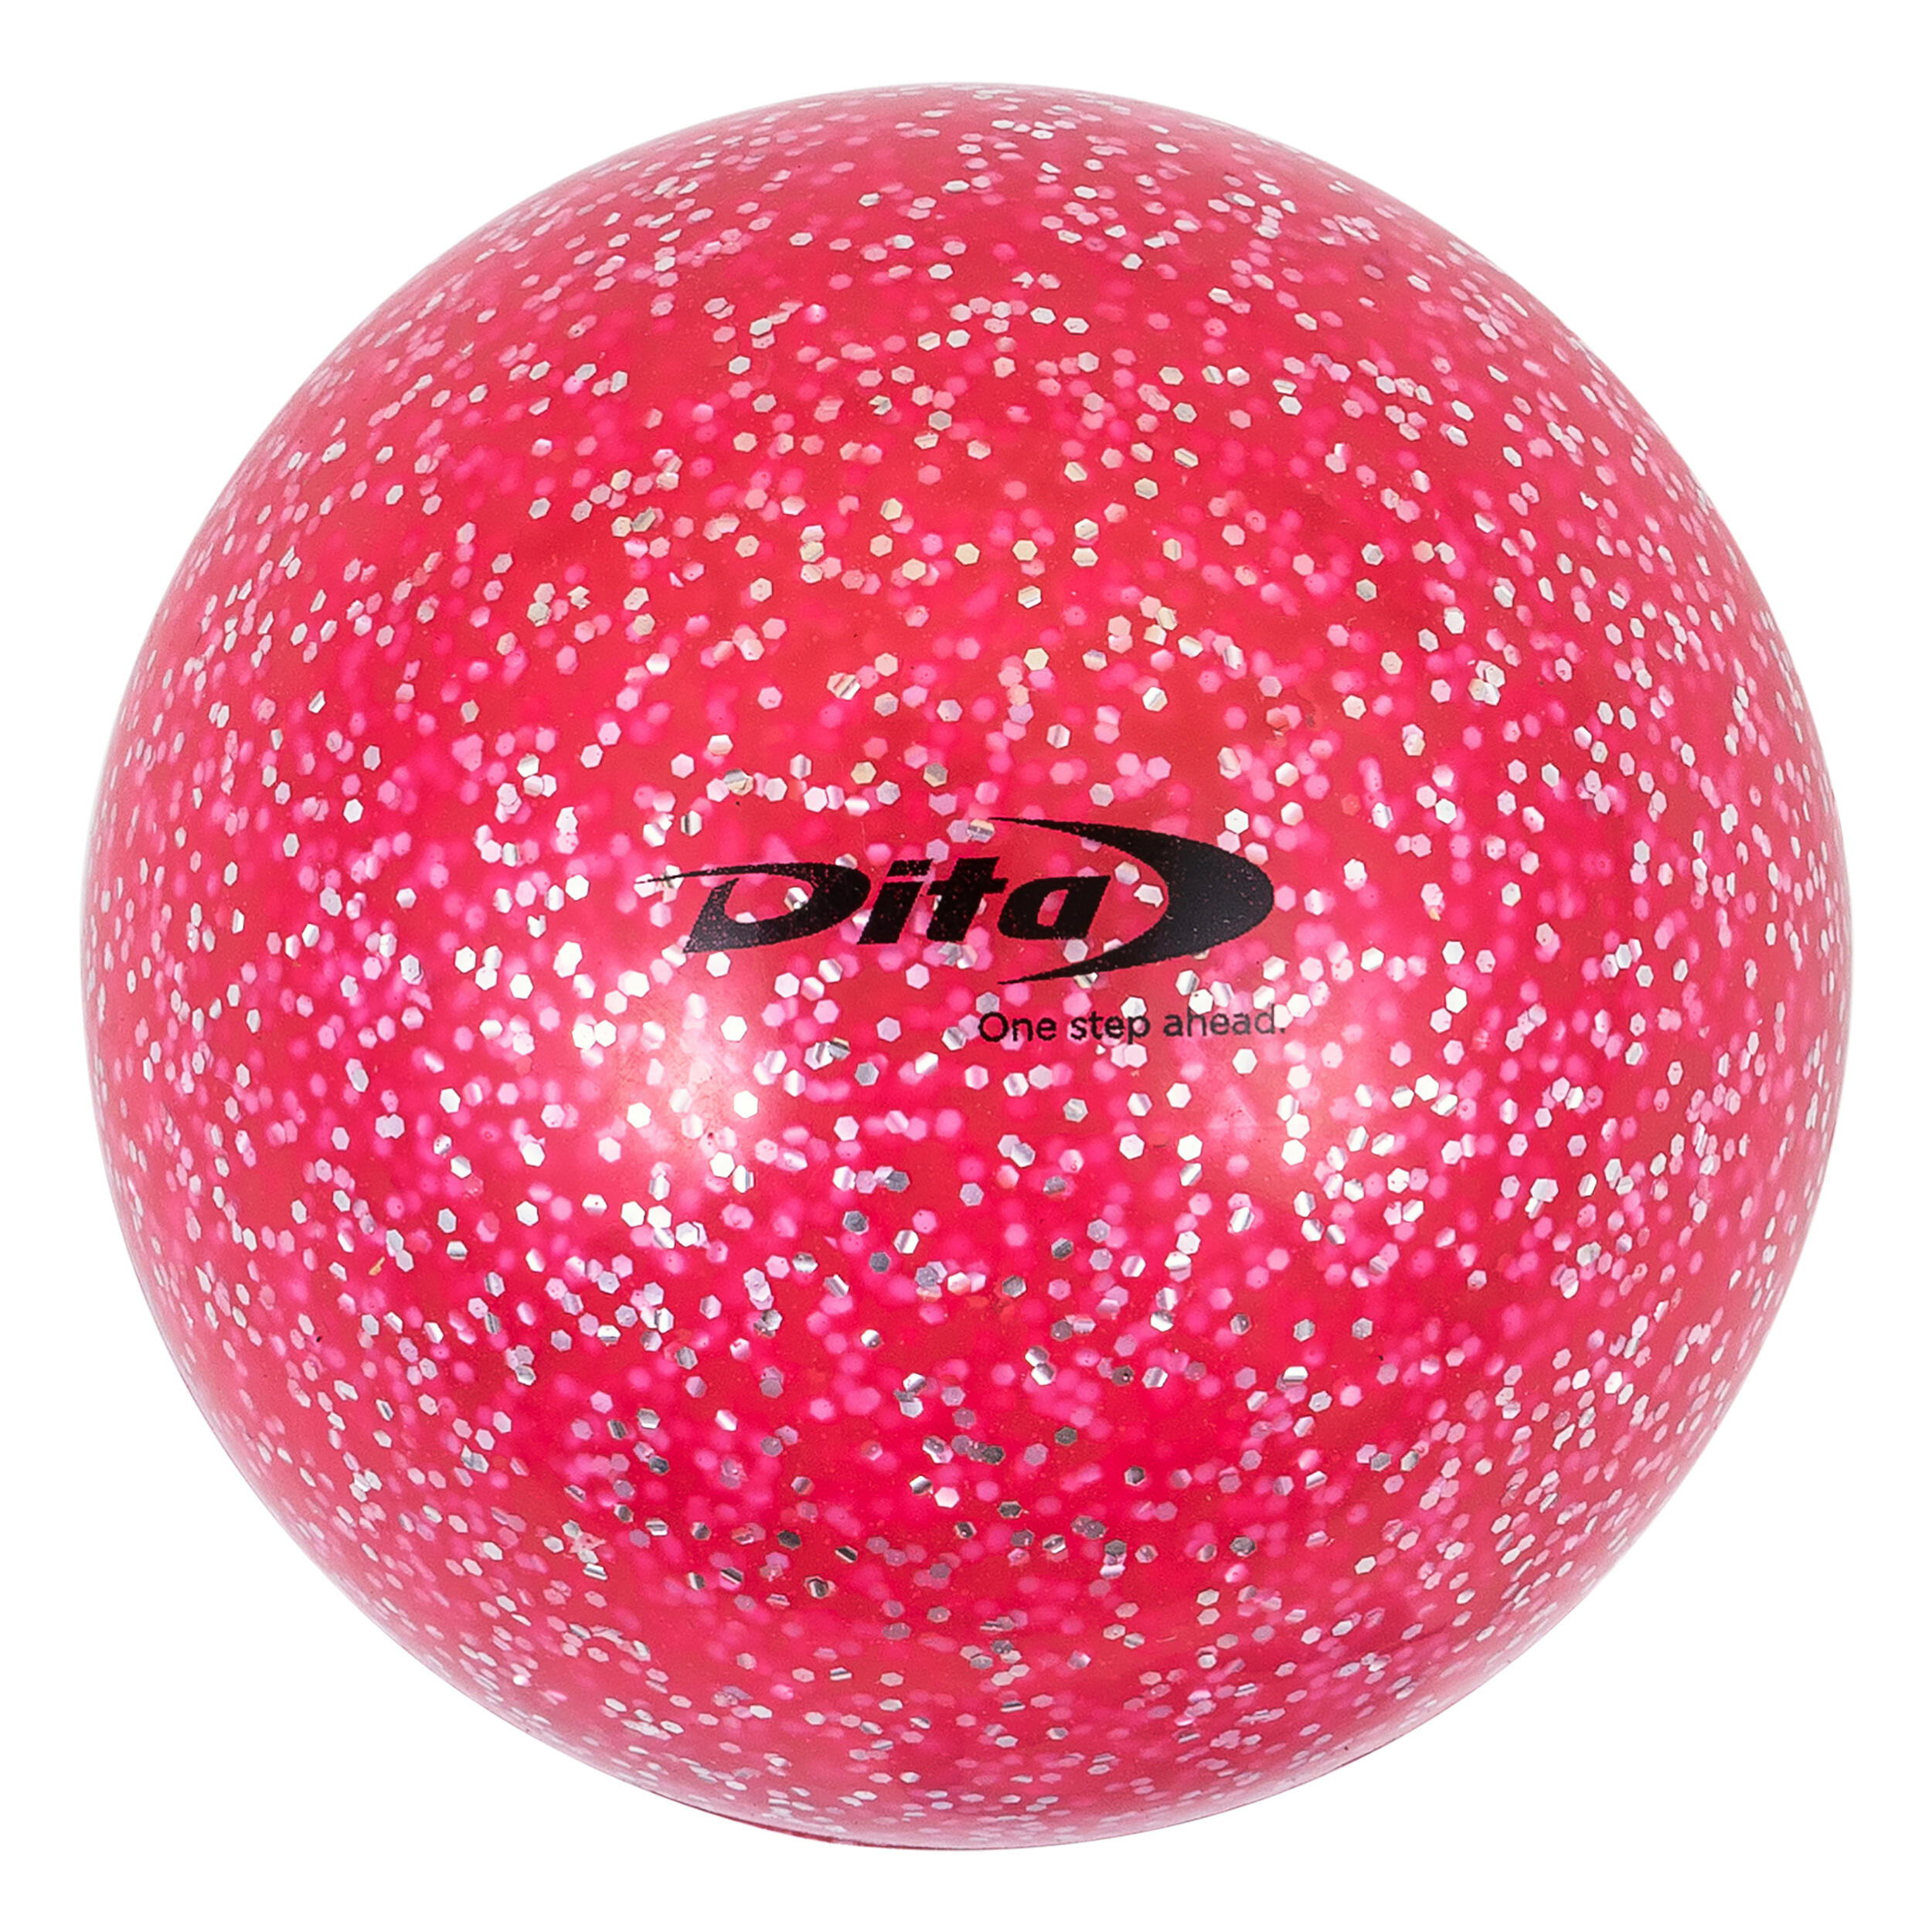 Smooth Field Hockey Ball - Pink Glitter 1/1